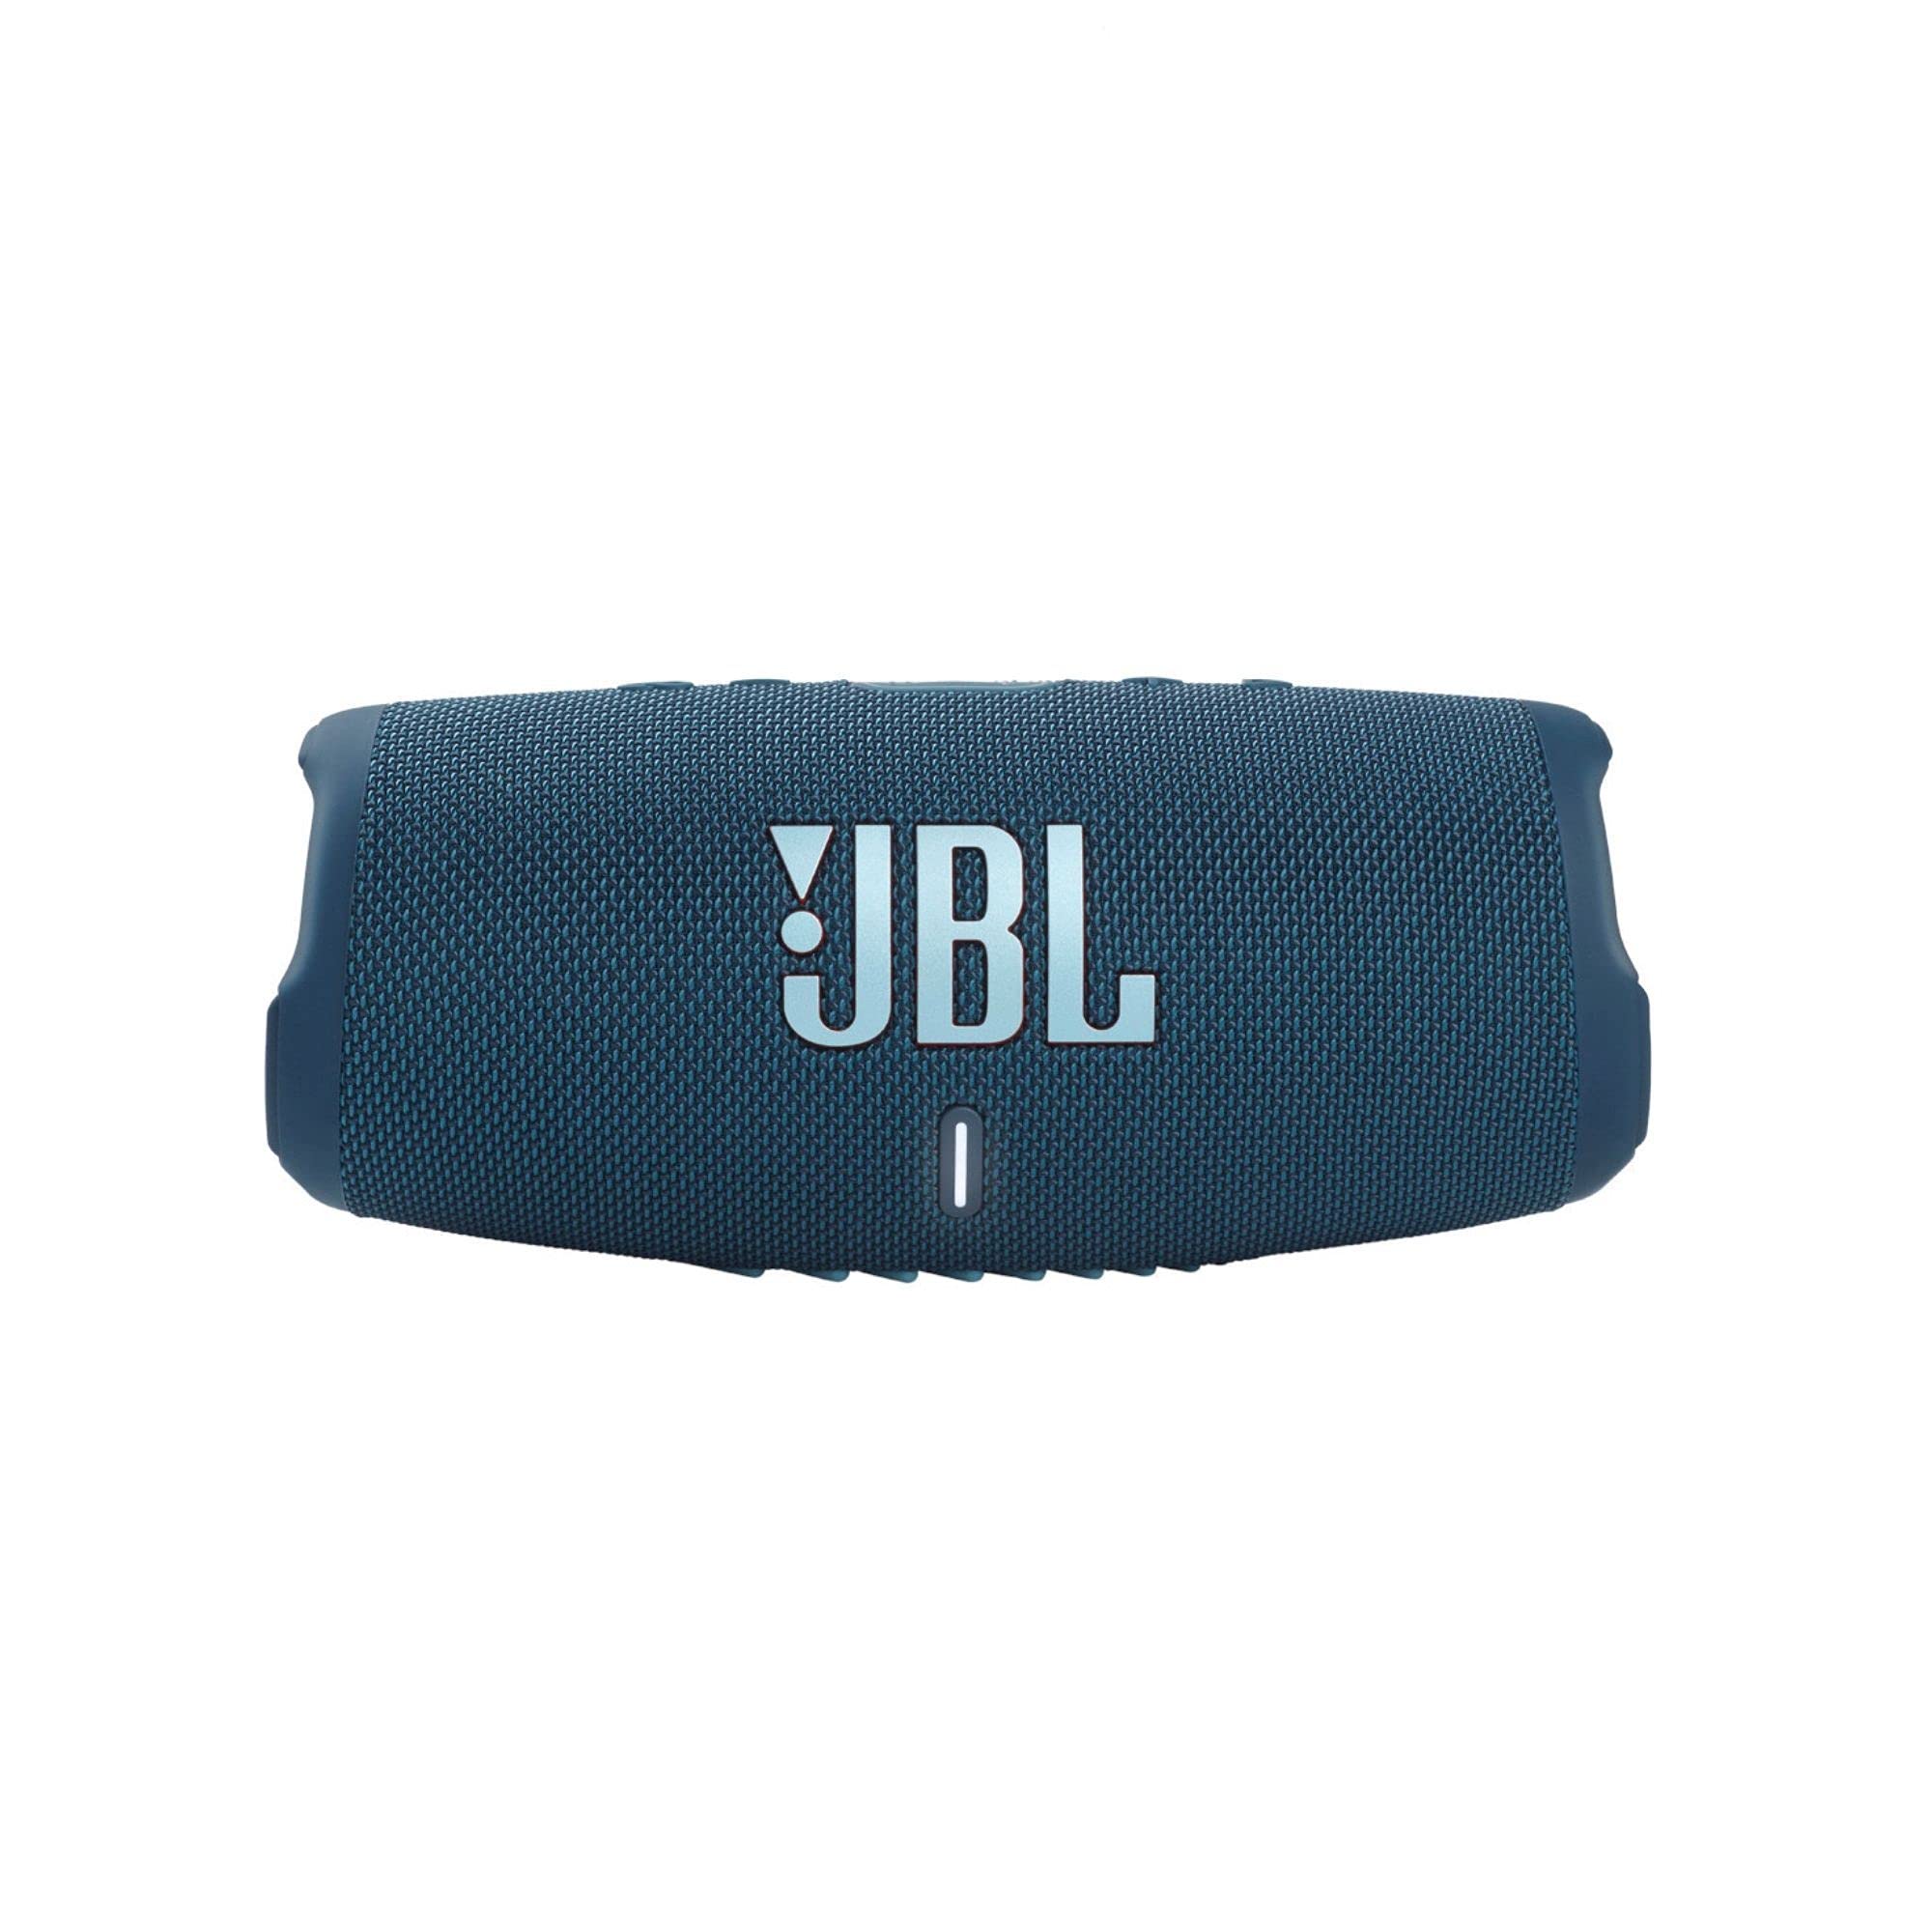 JBL Charge 5 - IP67 방수 및 USB 충전 출력을 갖춘 휴대용 블루투스 스피커 - 블루(리뉴얼)